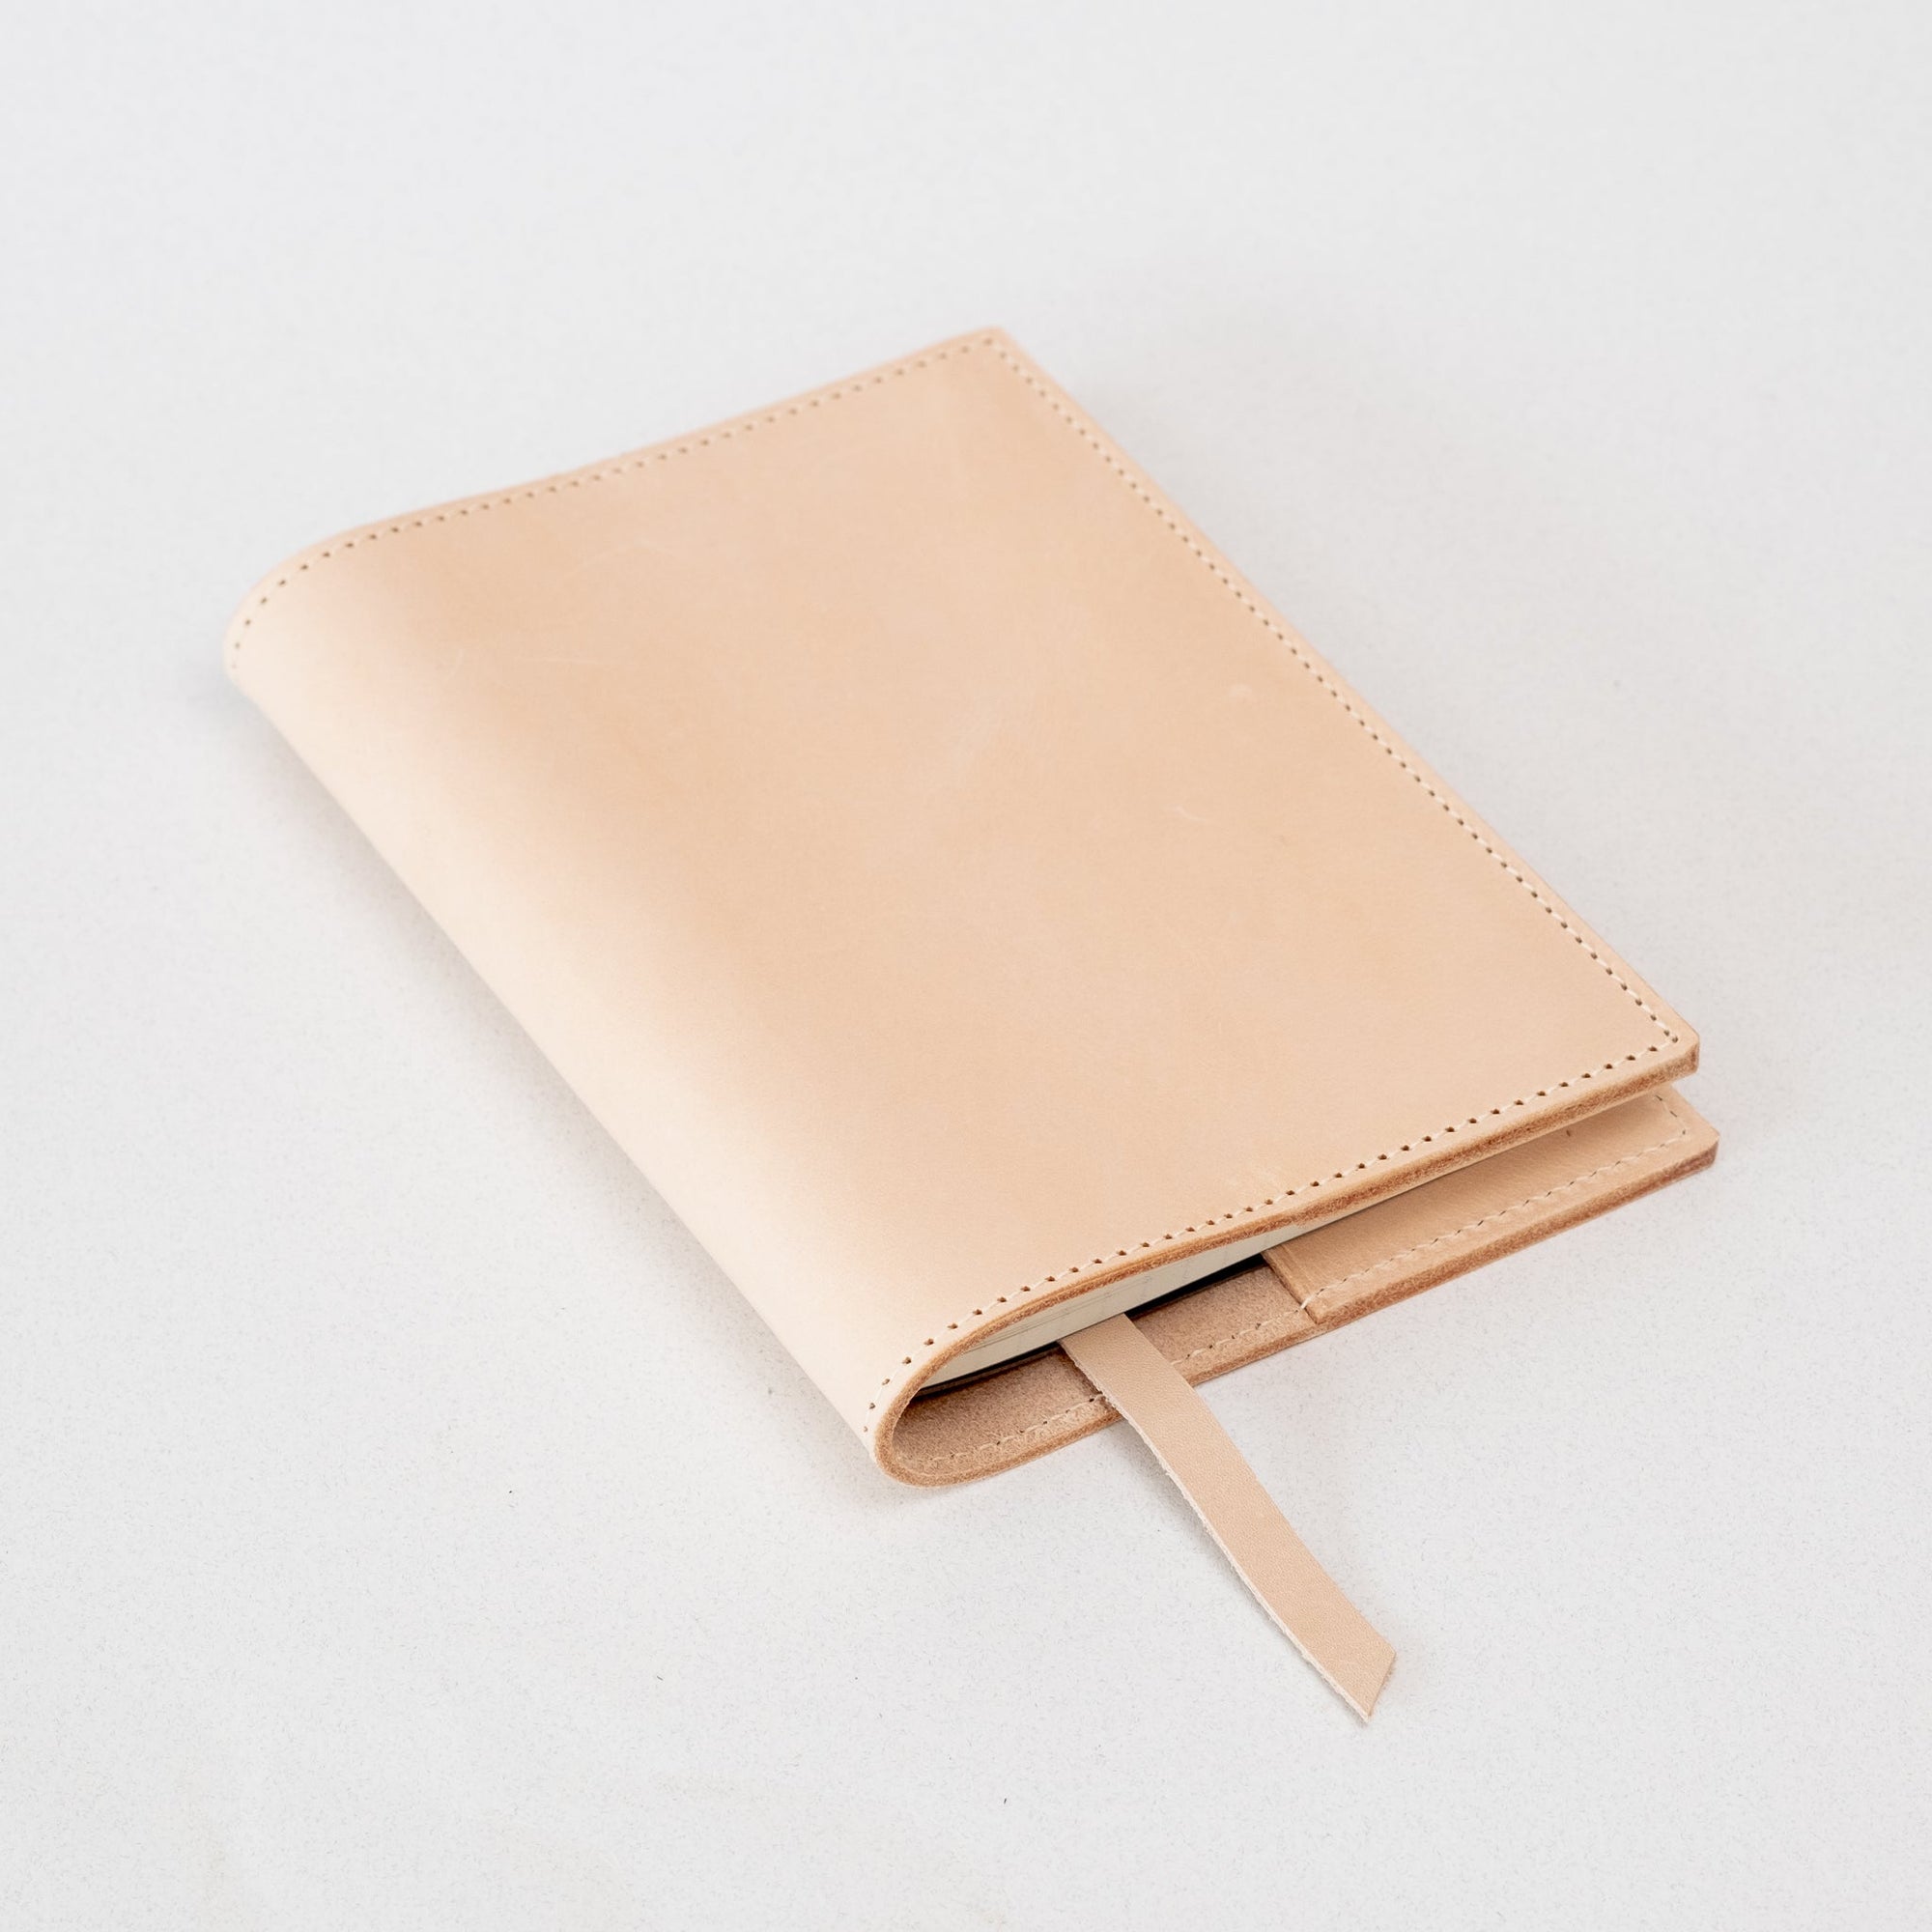 Handmade leather notebook / journal - Natural - tomsstudioHandmade leather notebook / journal - Natural